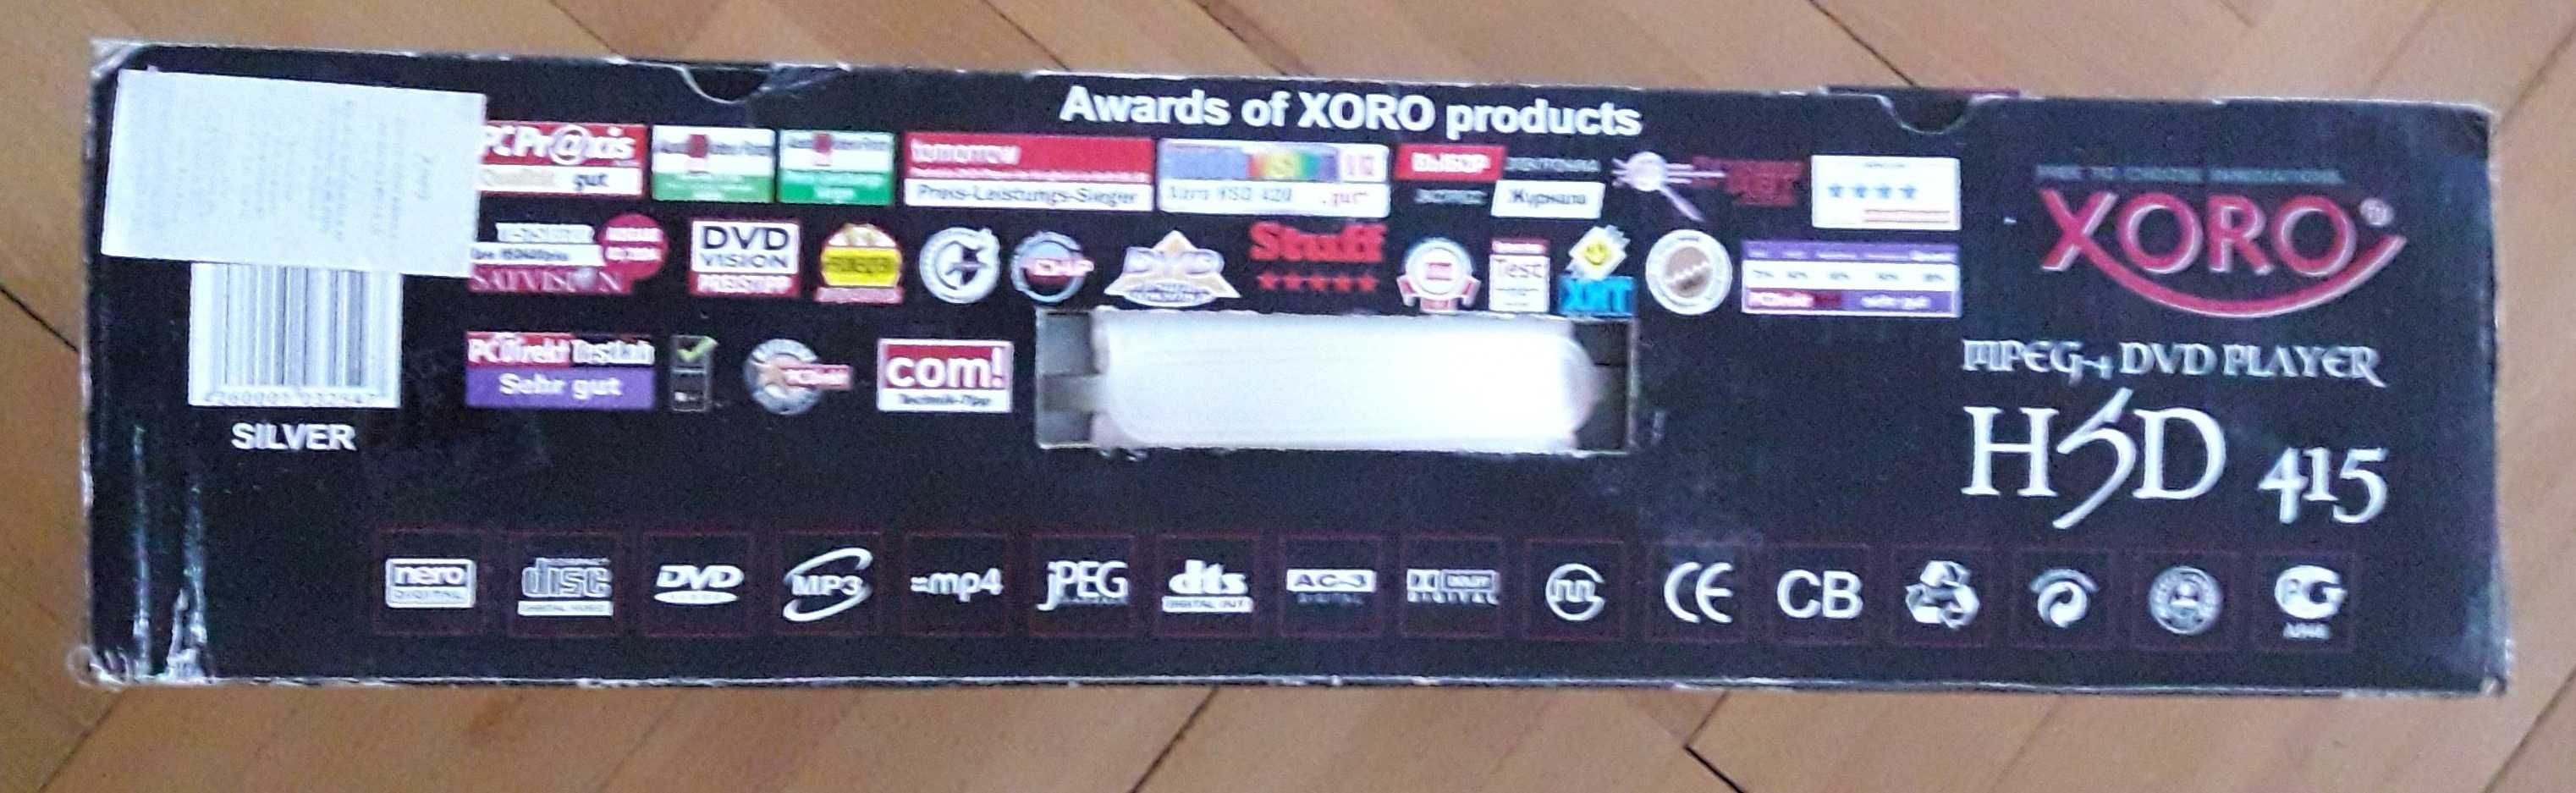 видеомагнитофон XORO HSD415 не рабочий